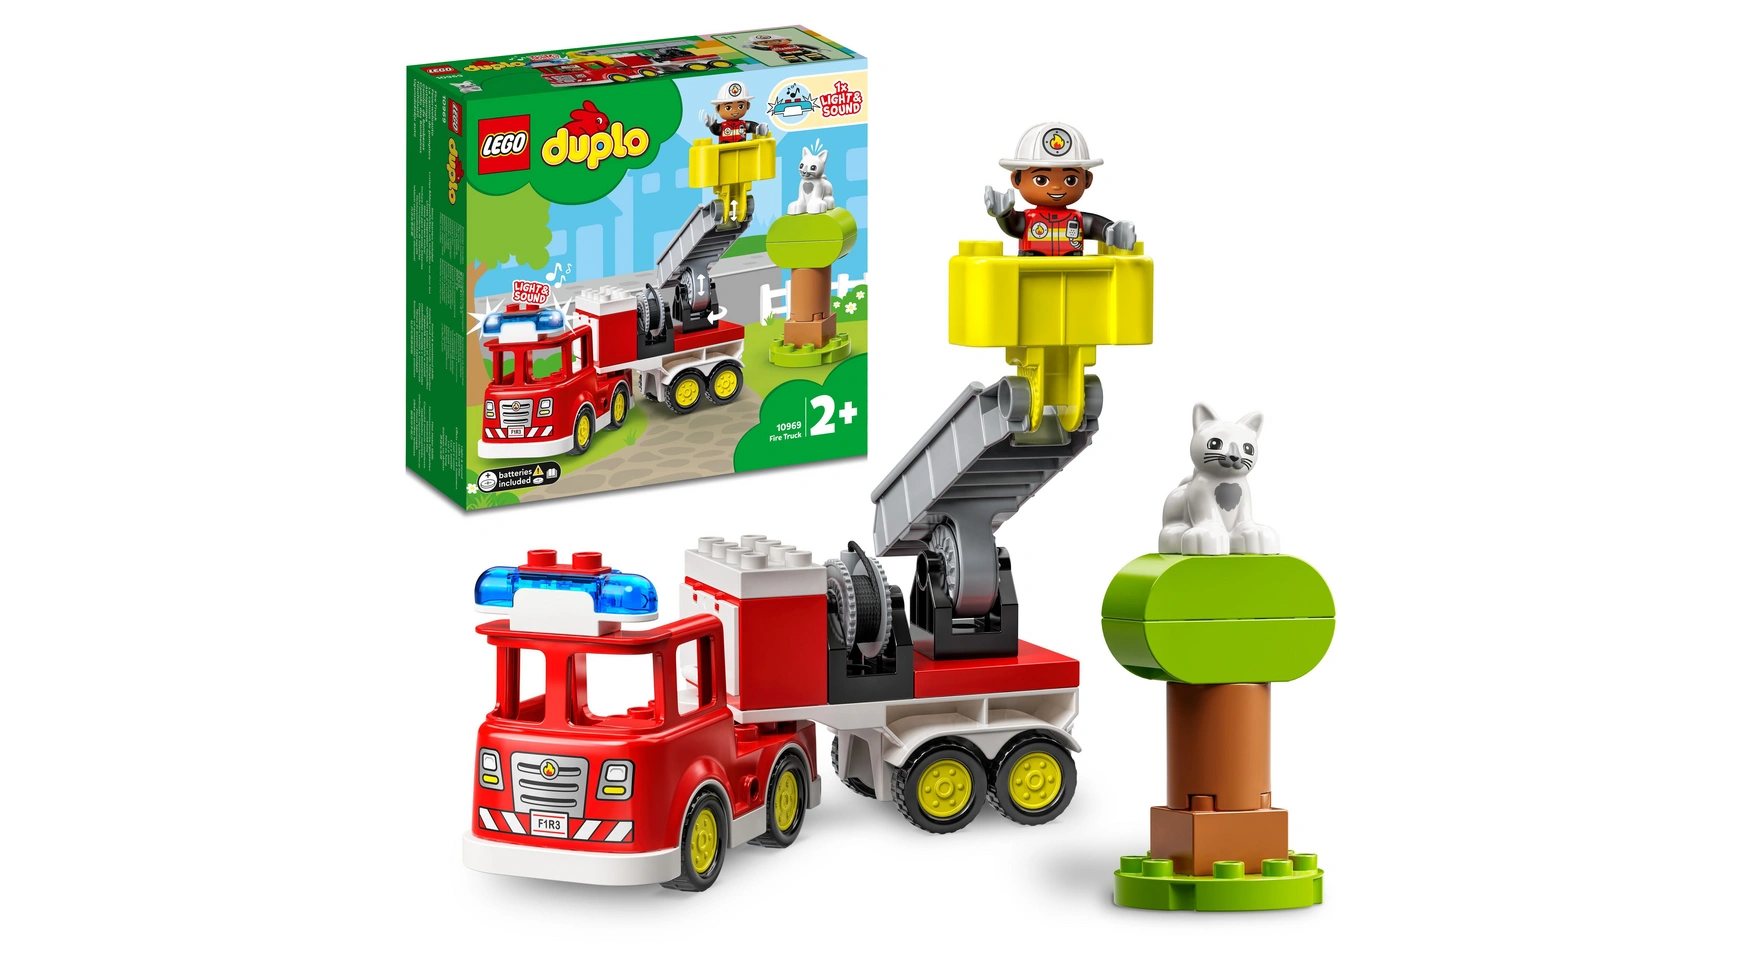 Lego DUPLO Town Пожарная машина конструктор lego duplo 10969 fire truck set пожарная машина с мигалкой 21 дет